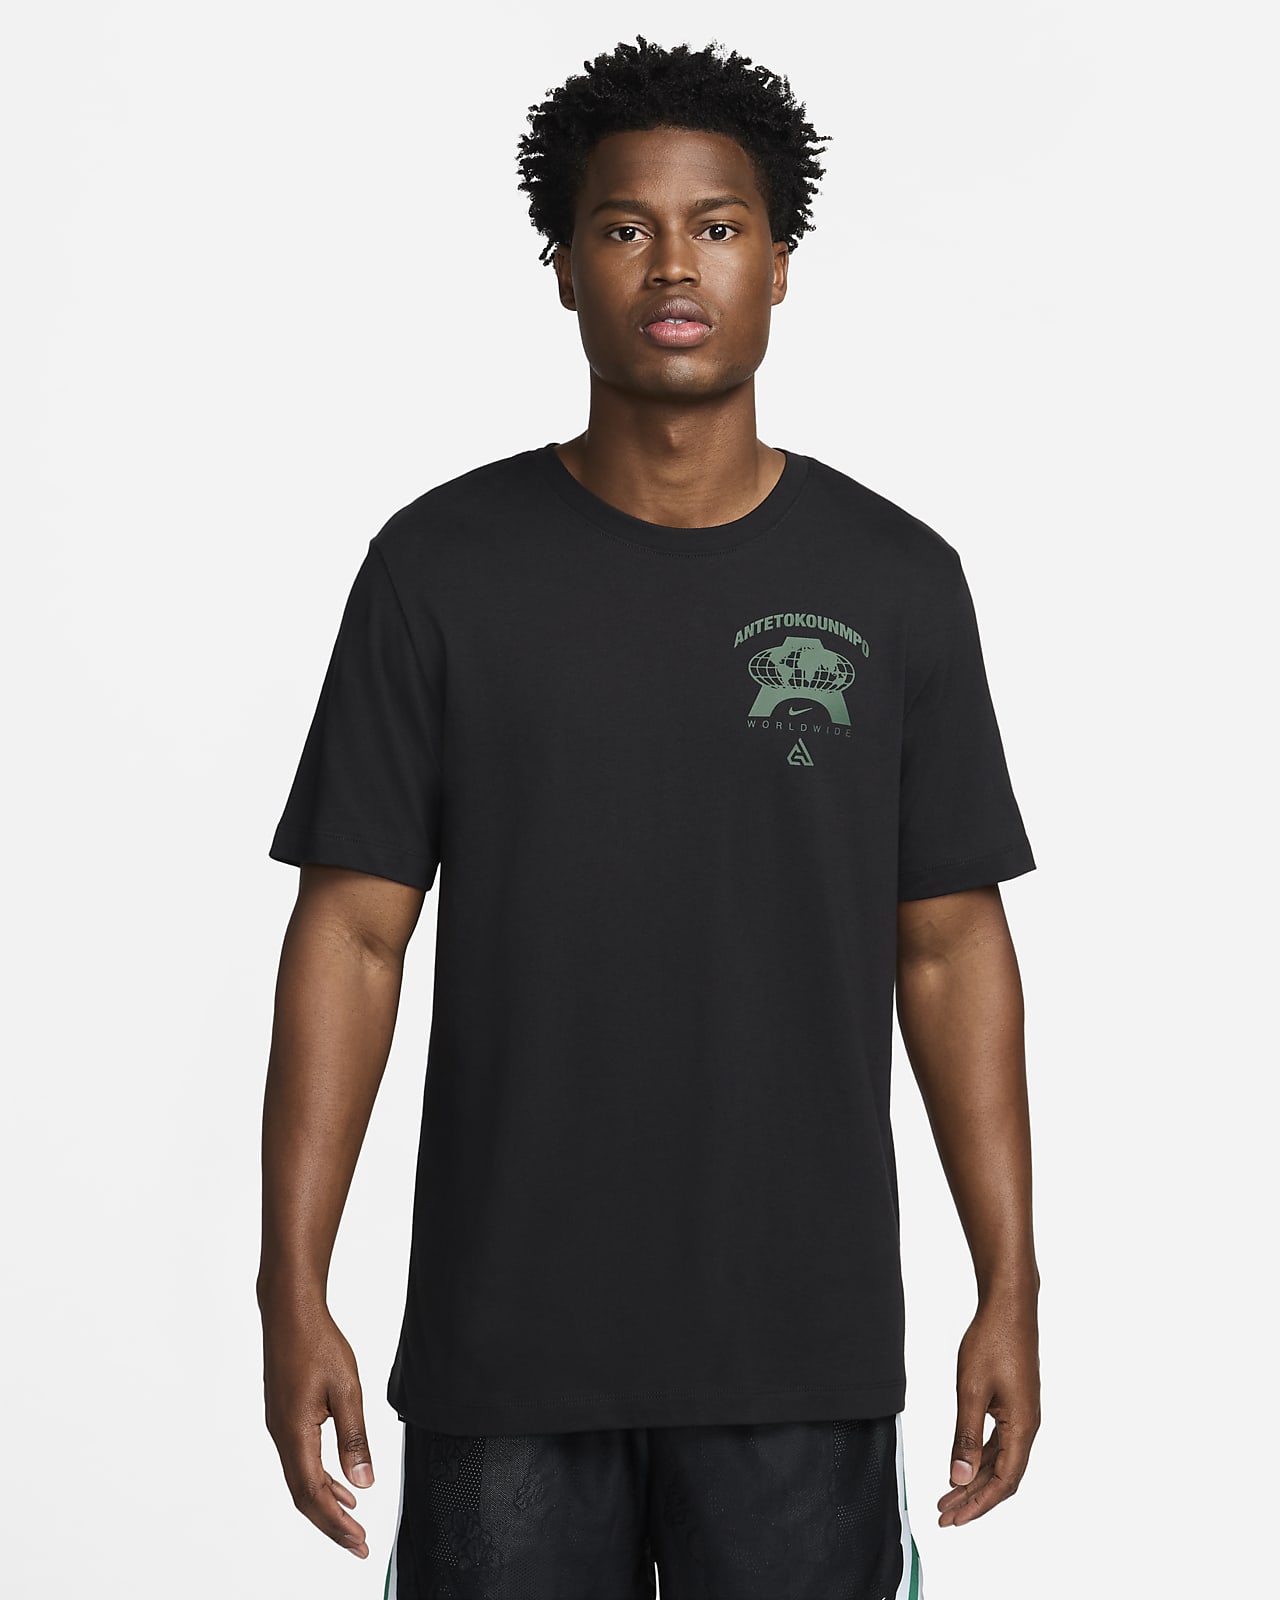 Basket-t-shirt Nike Giannis M90 för män